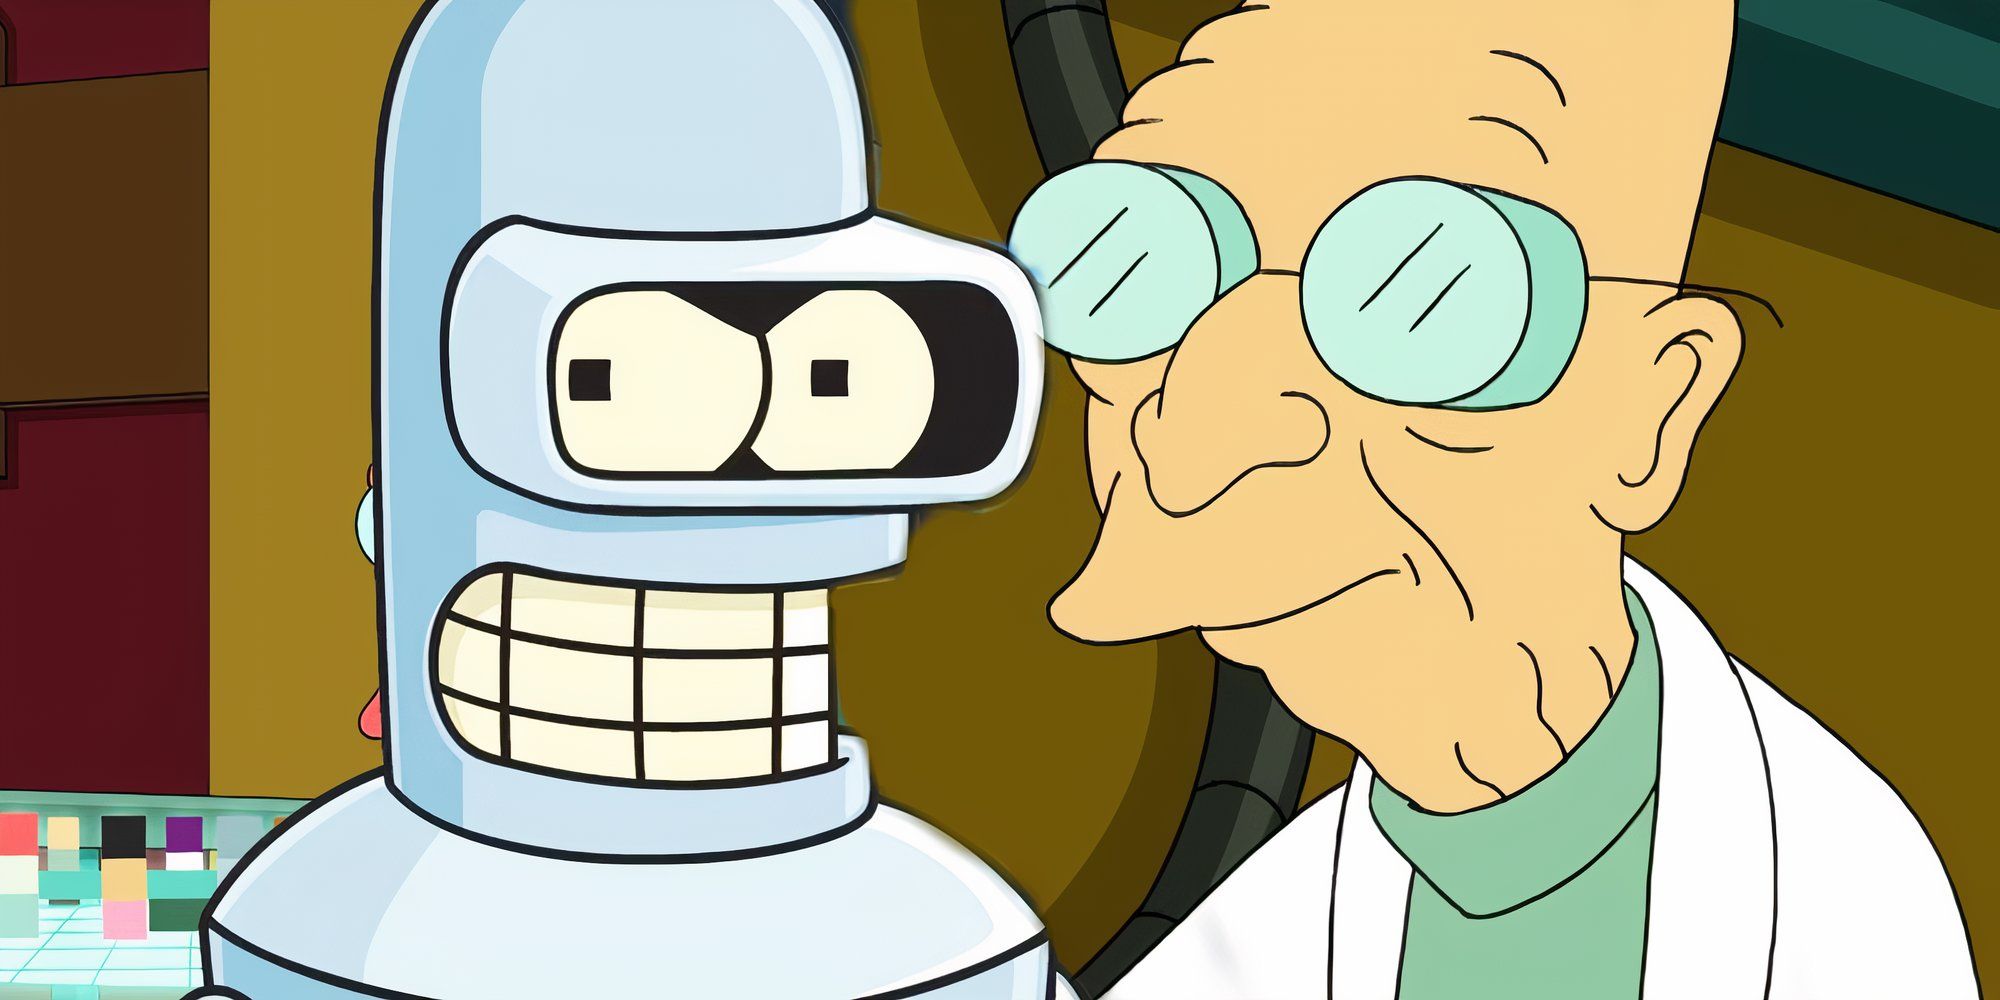 Bender smiling next to Professor Farnsworth smiling in Futurama